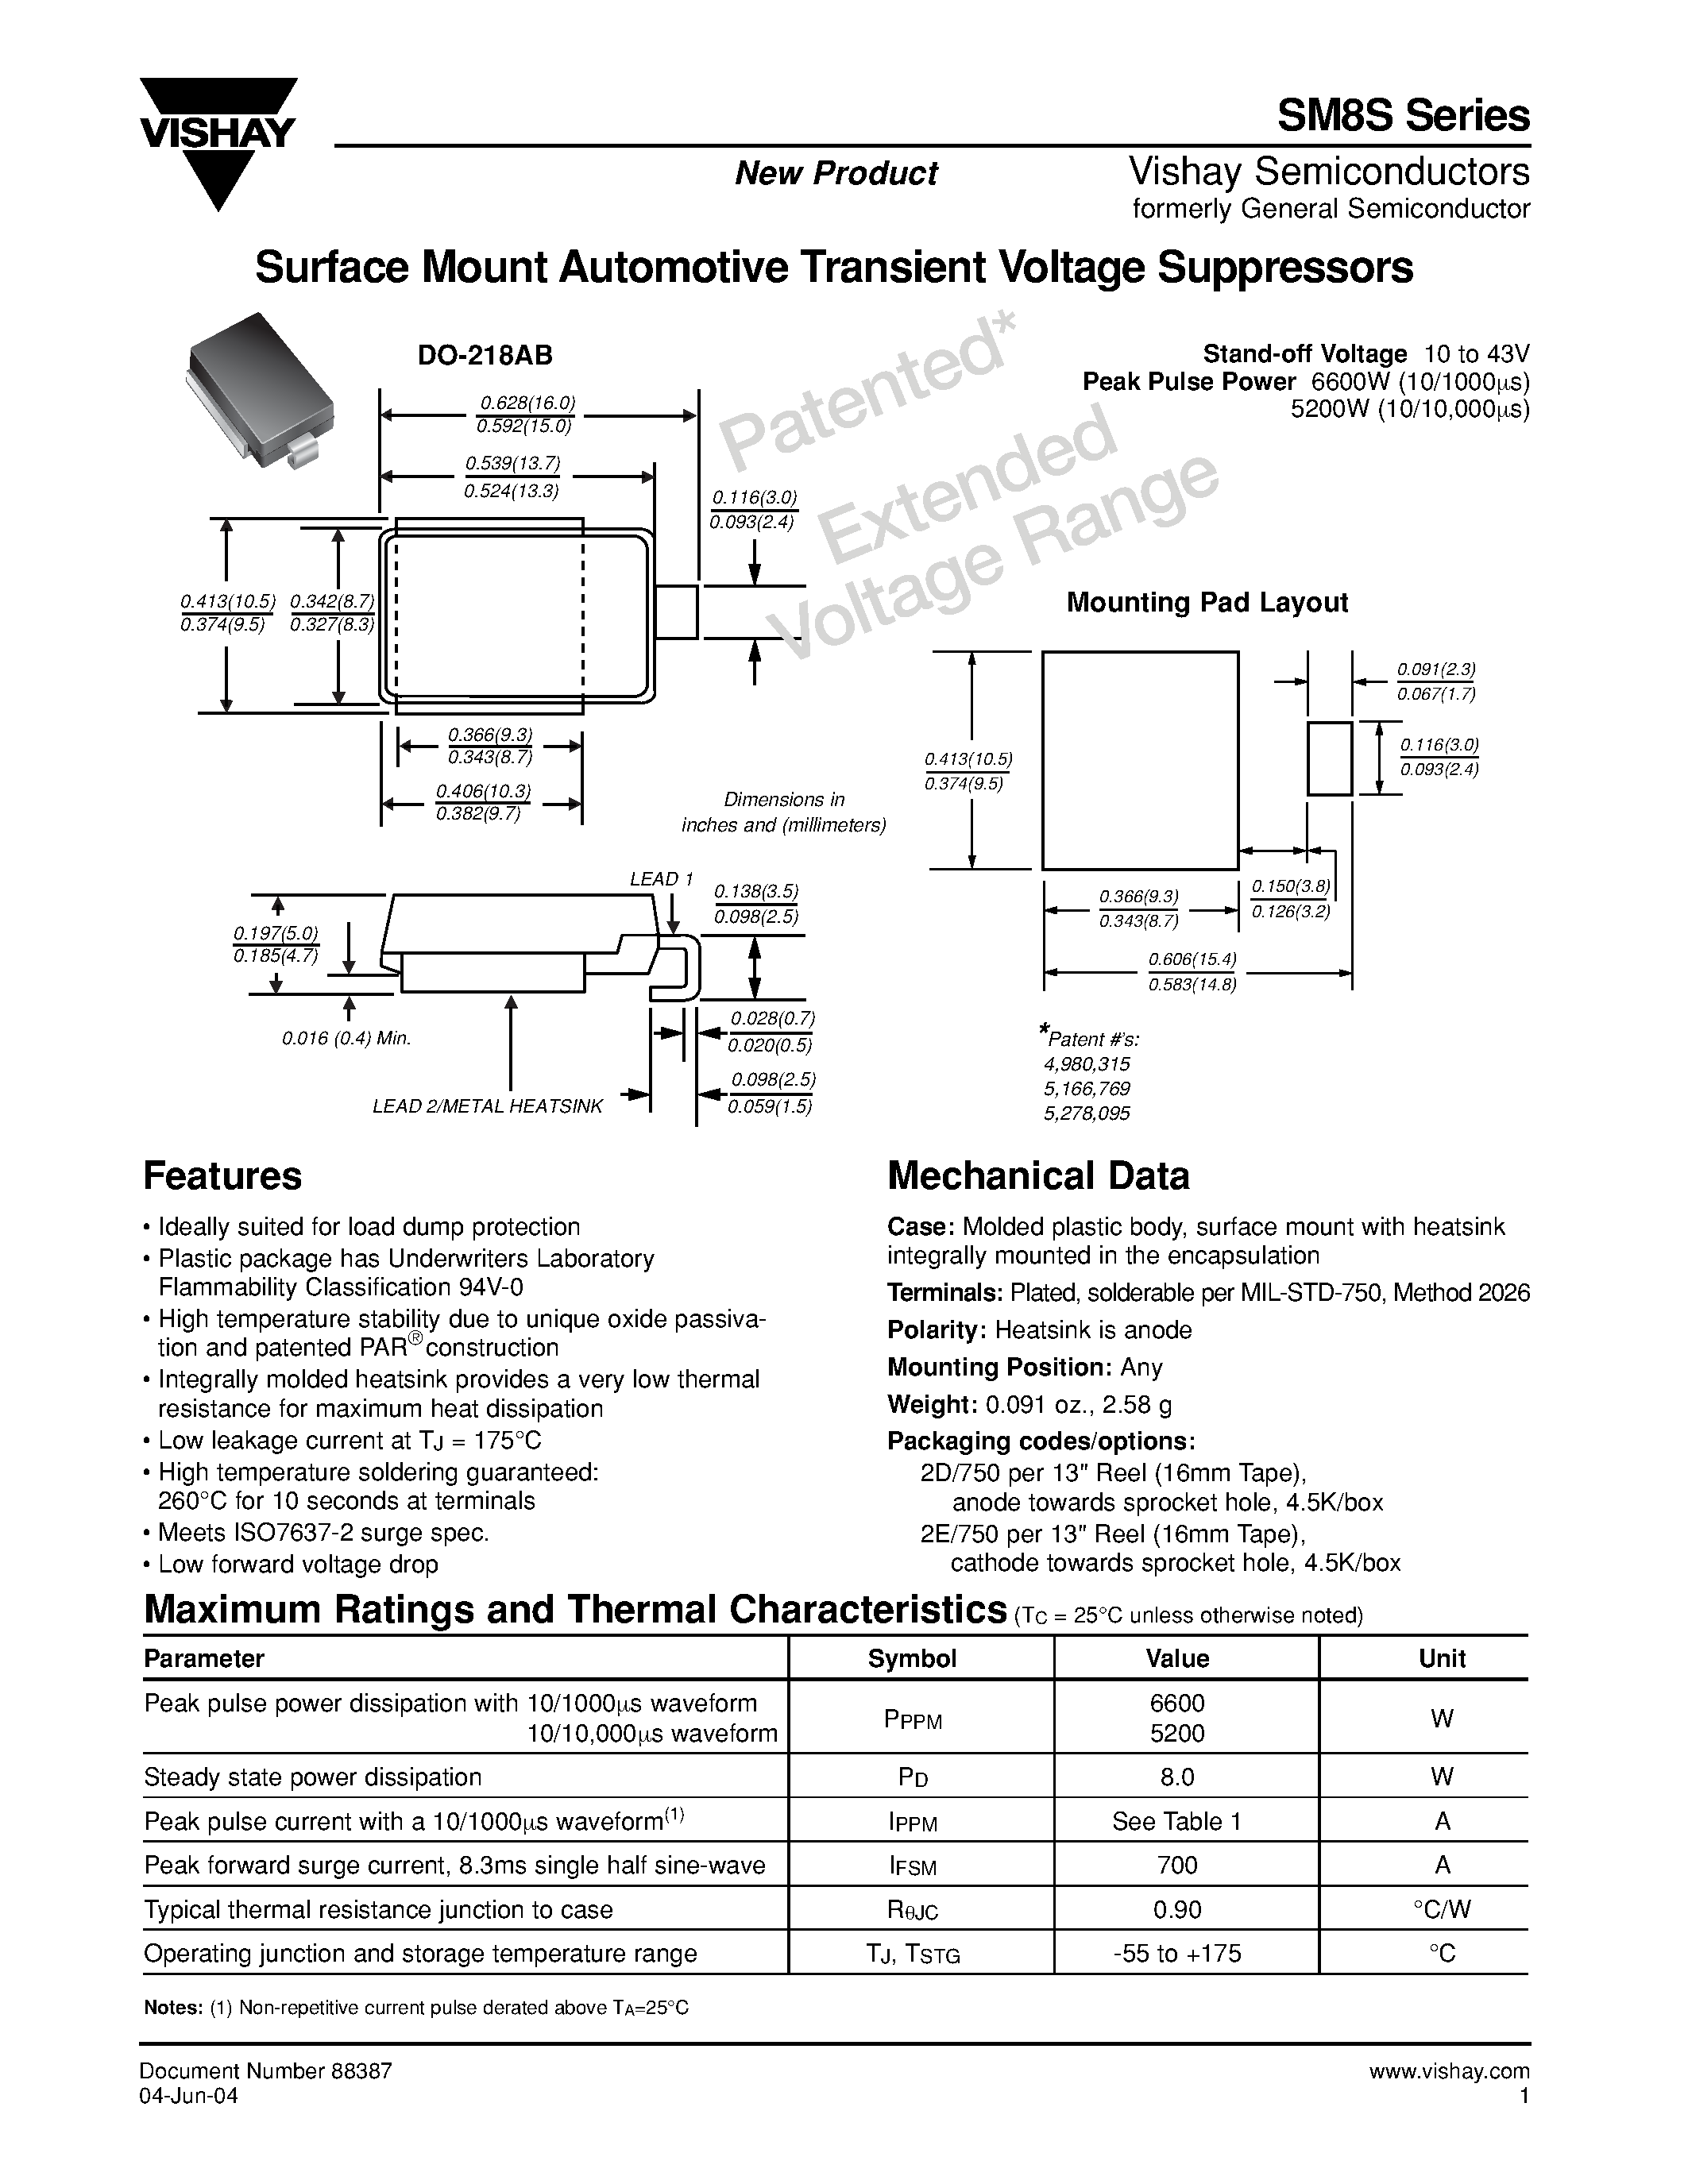 Даташит SM8S14A - Surface Mount Automotive Transient Voltage Suppressors страница 1